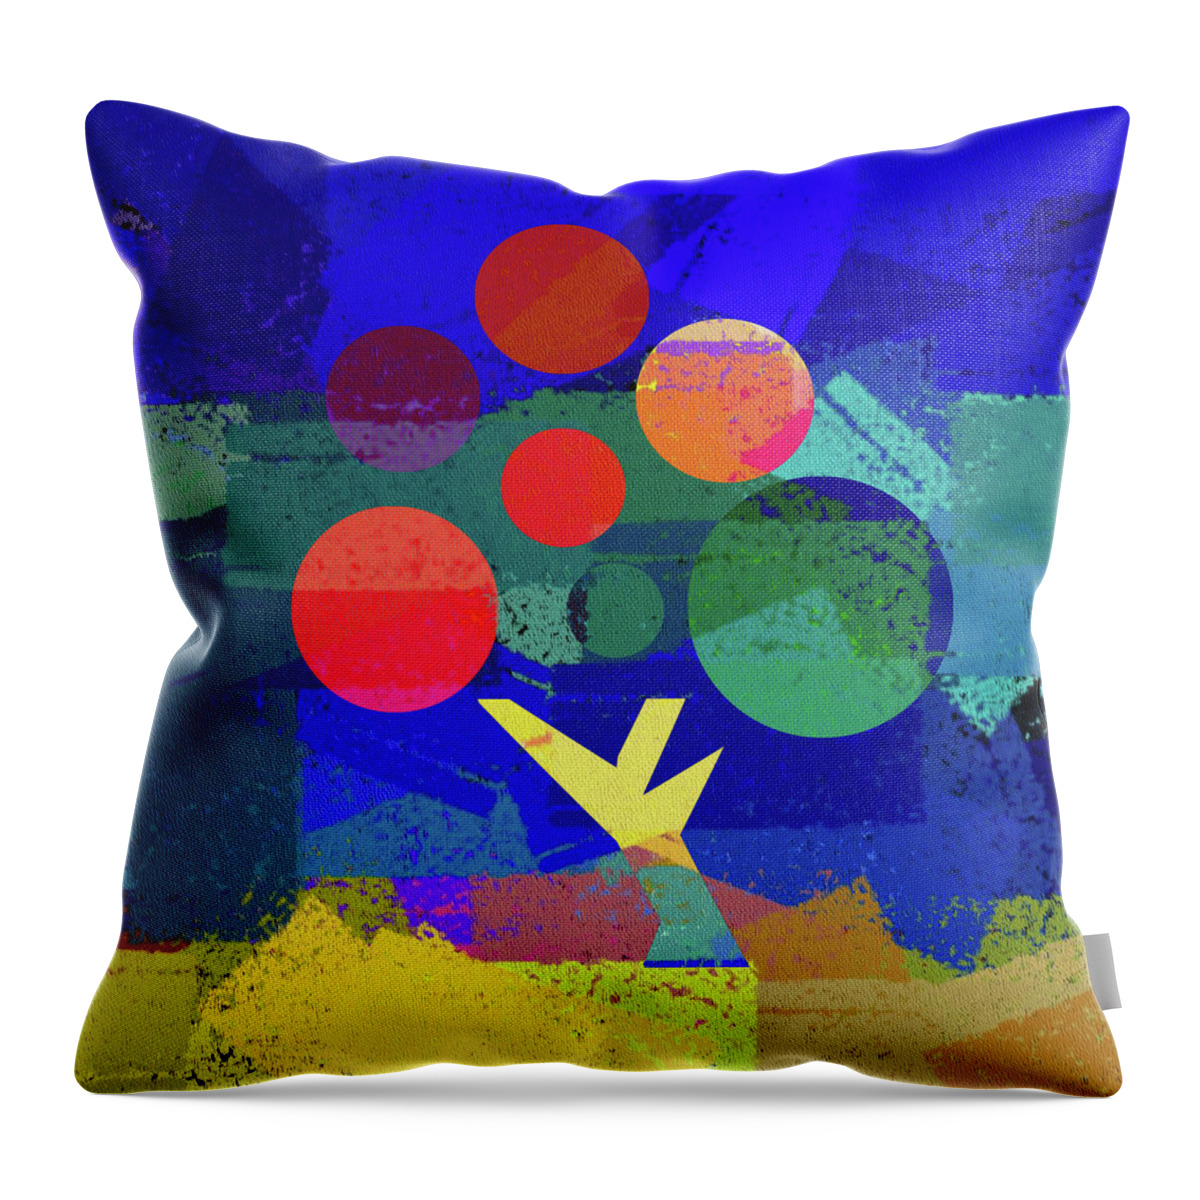 Sacred Geometry Throw Pillow featuring the digital art Jubilant by Az Jackson